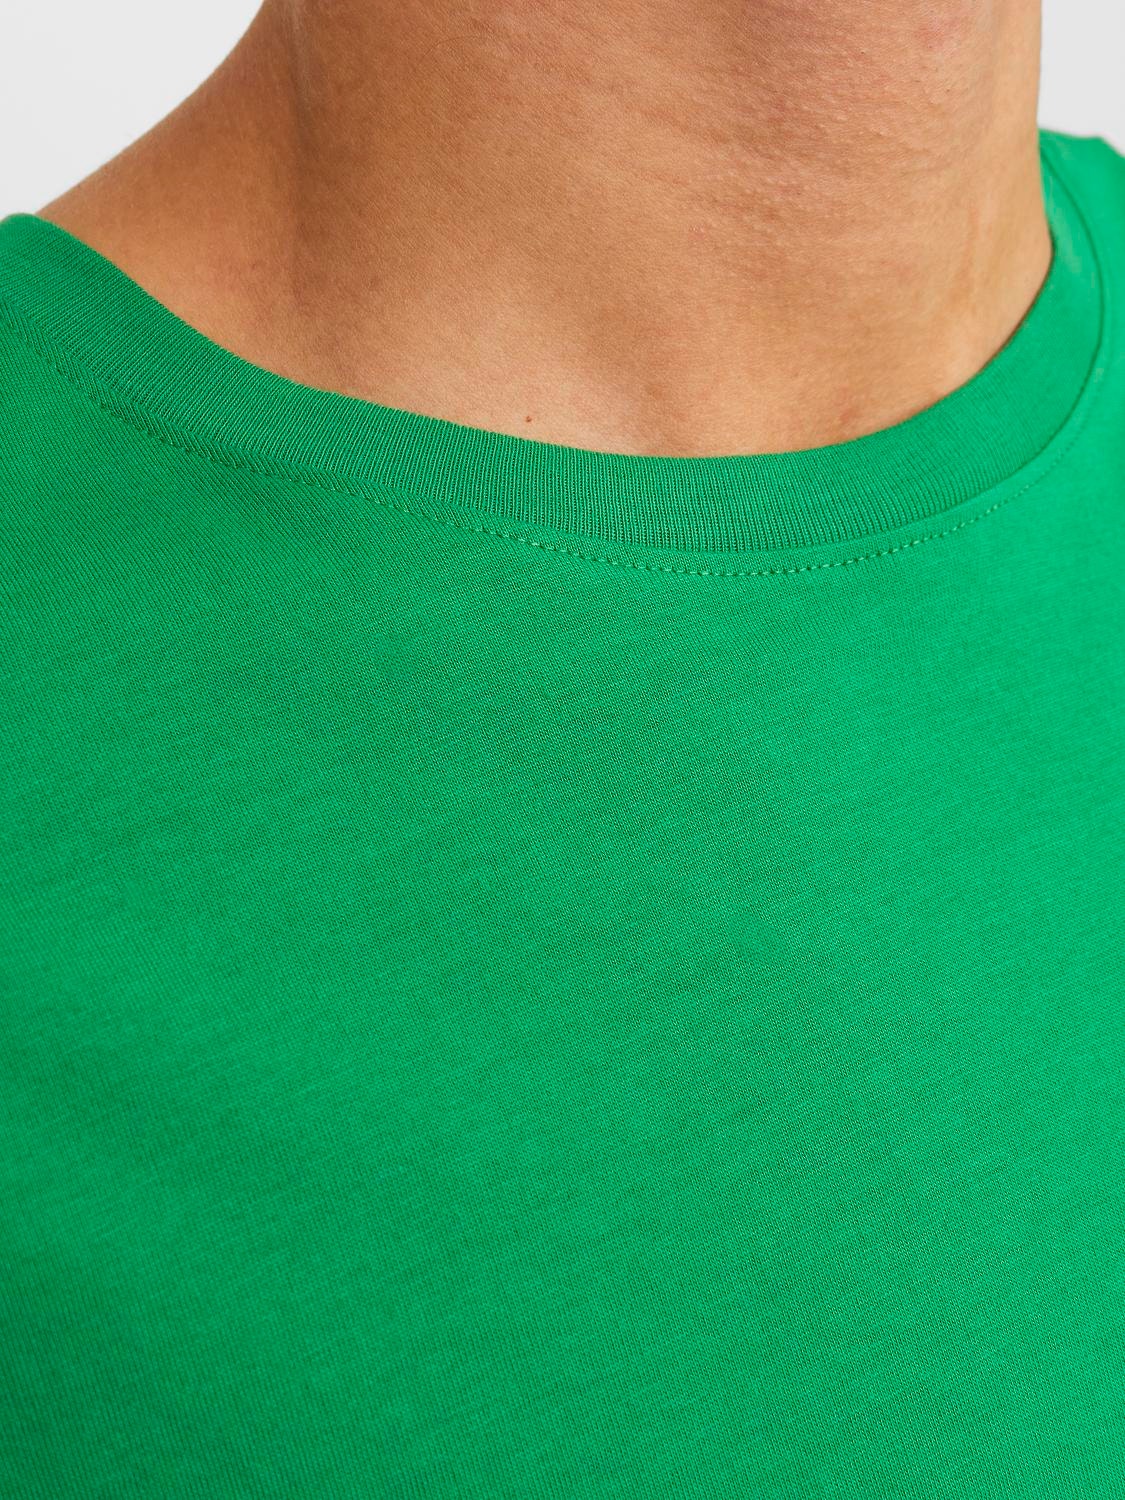 Jack & Jones Camiseta Liso Cuello redondo -Green Bee - 12156101